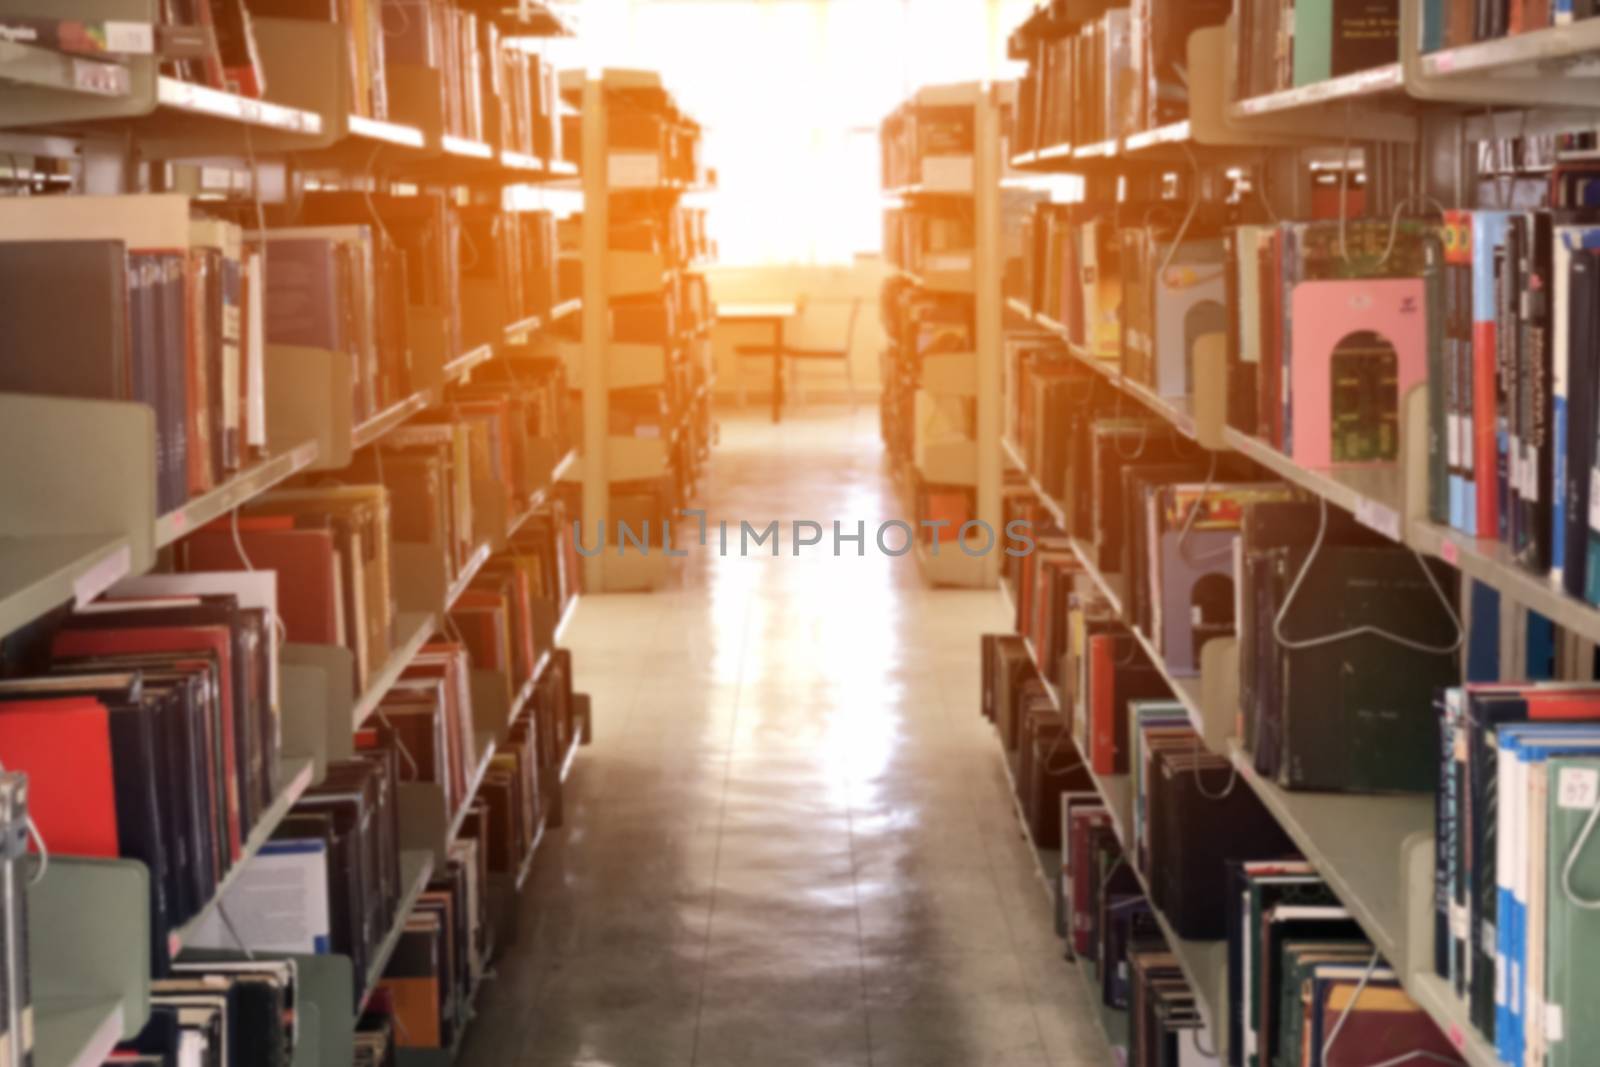 Bookshelf in public library. Blur effect. Background.